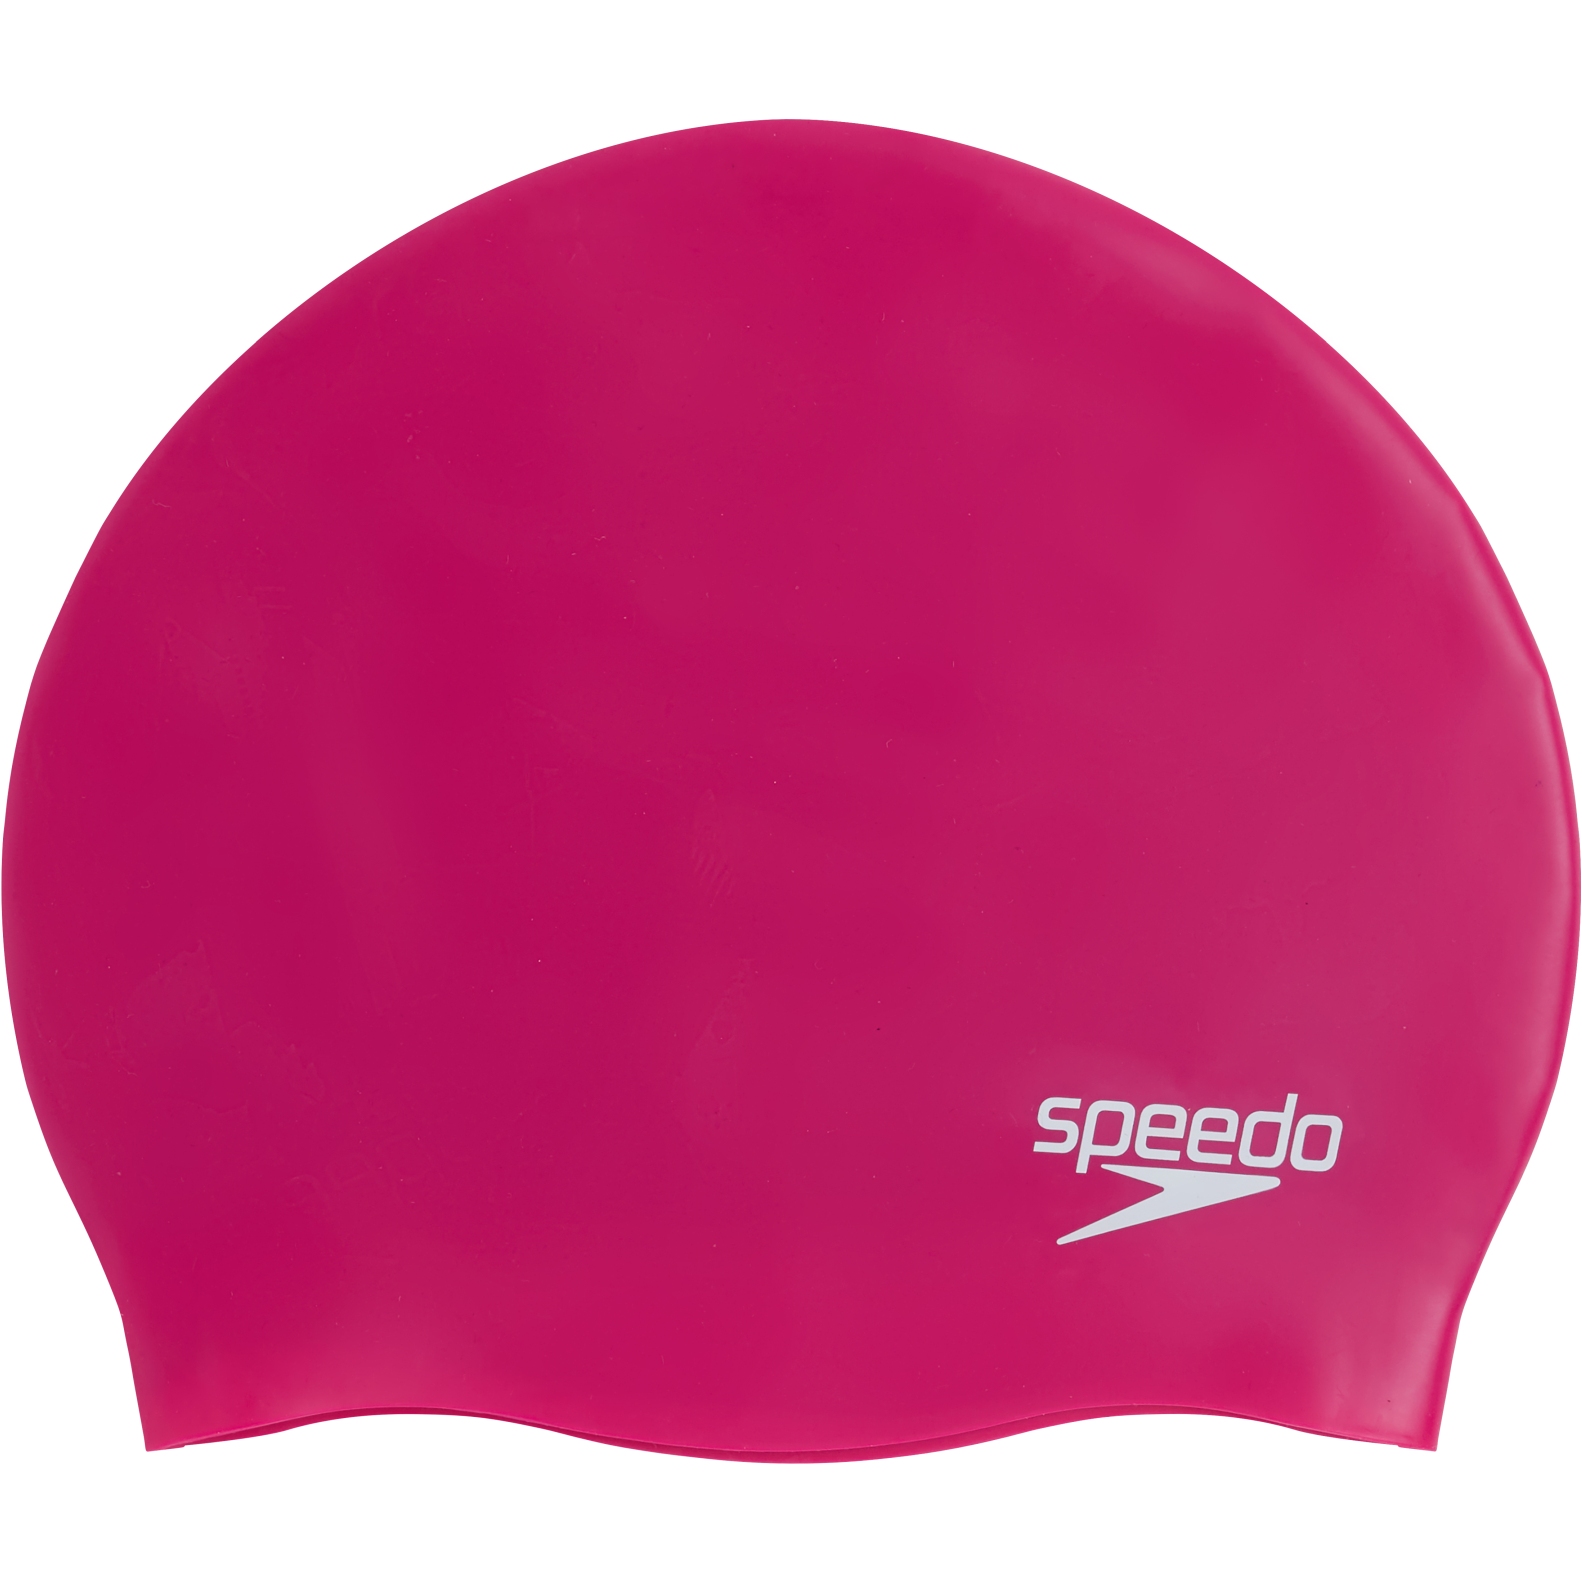 Productfoto van Speedo Plain Moulded Silicone Badmuts - electric pink